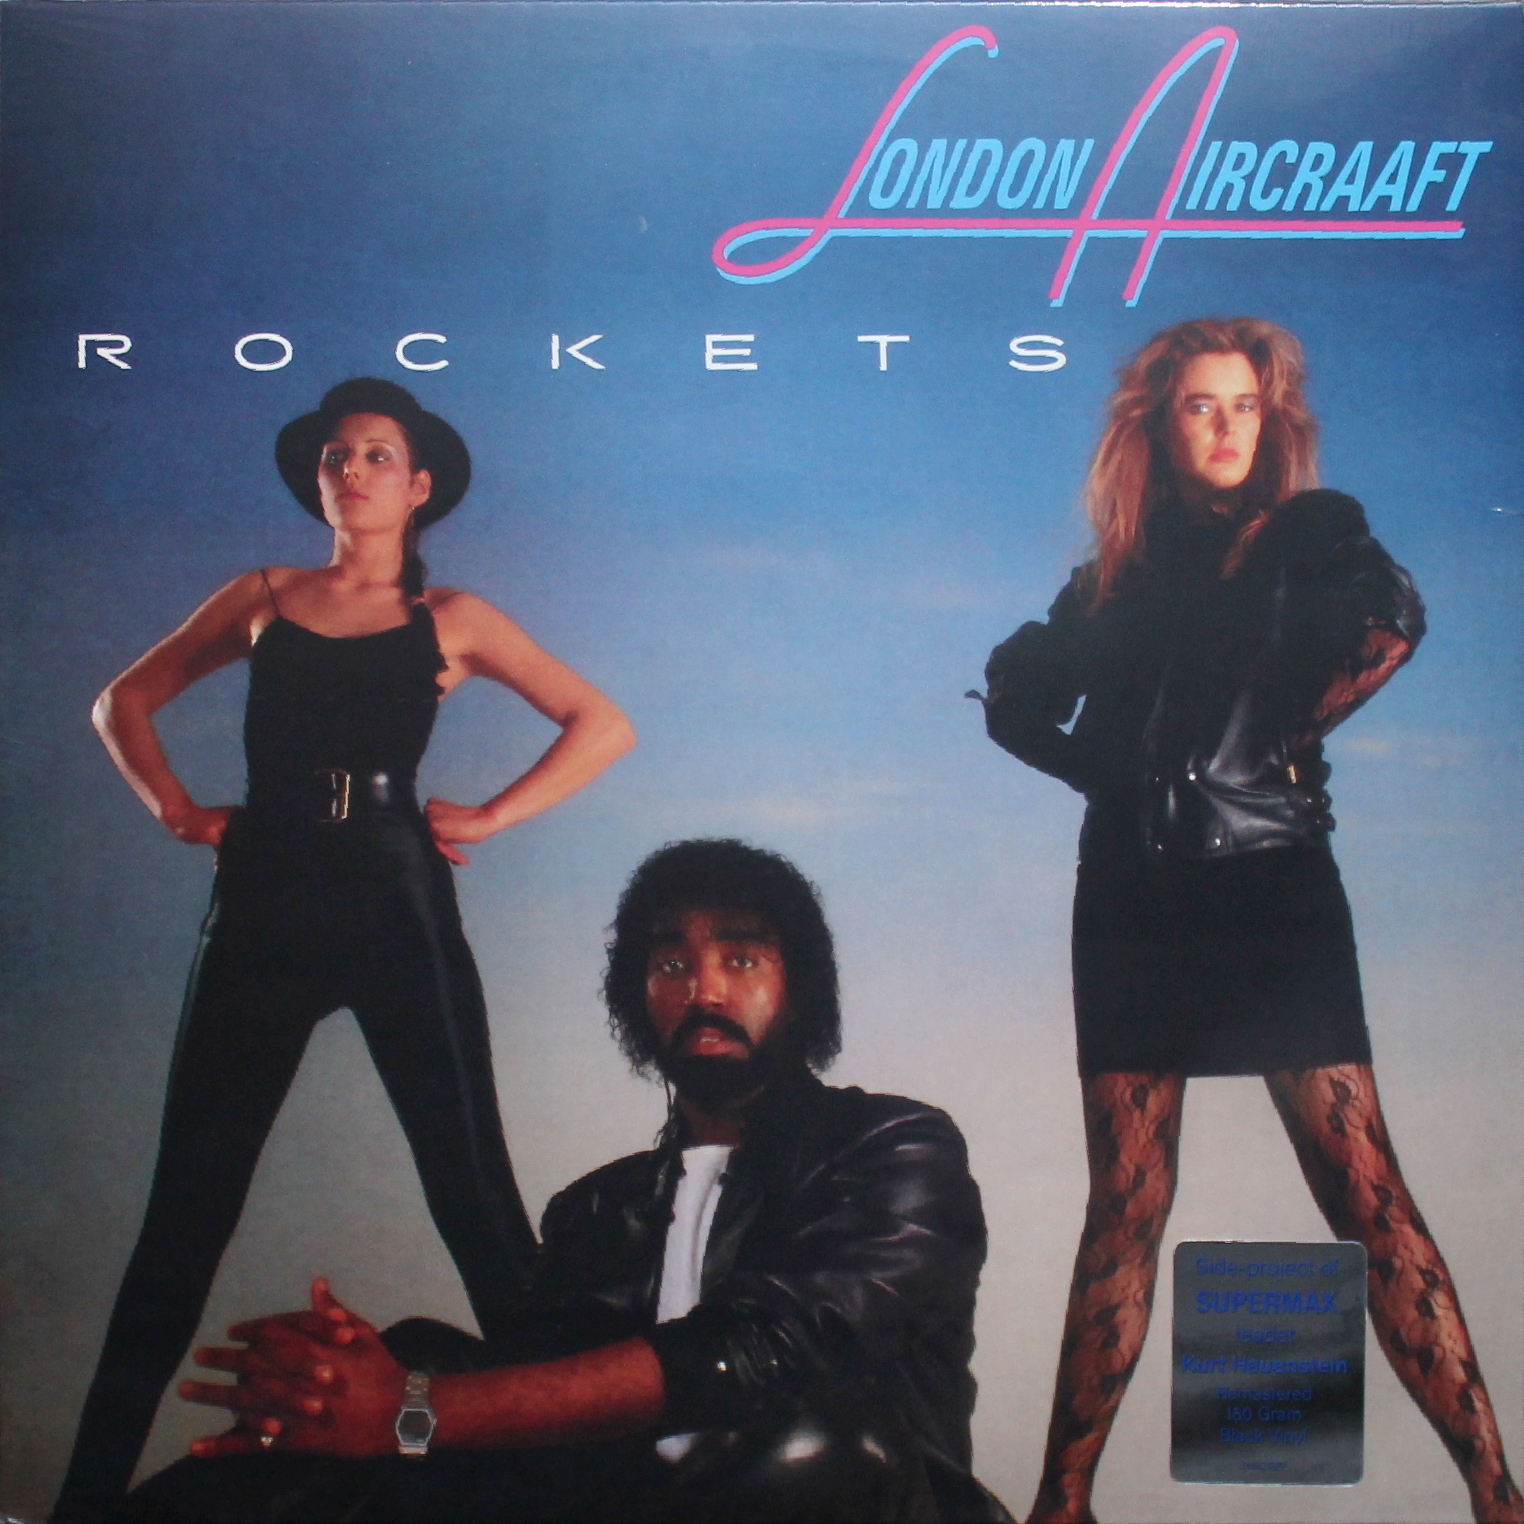 London Aircraaft Rockets (LP) - купить в котофото.ру, цена на Мегамаркет